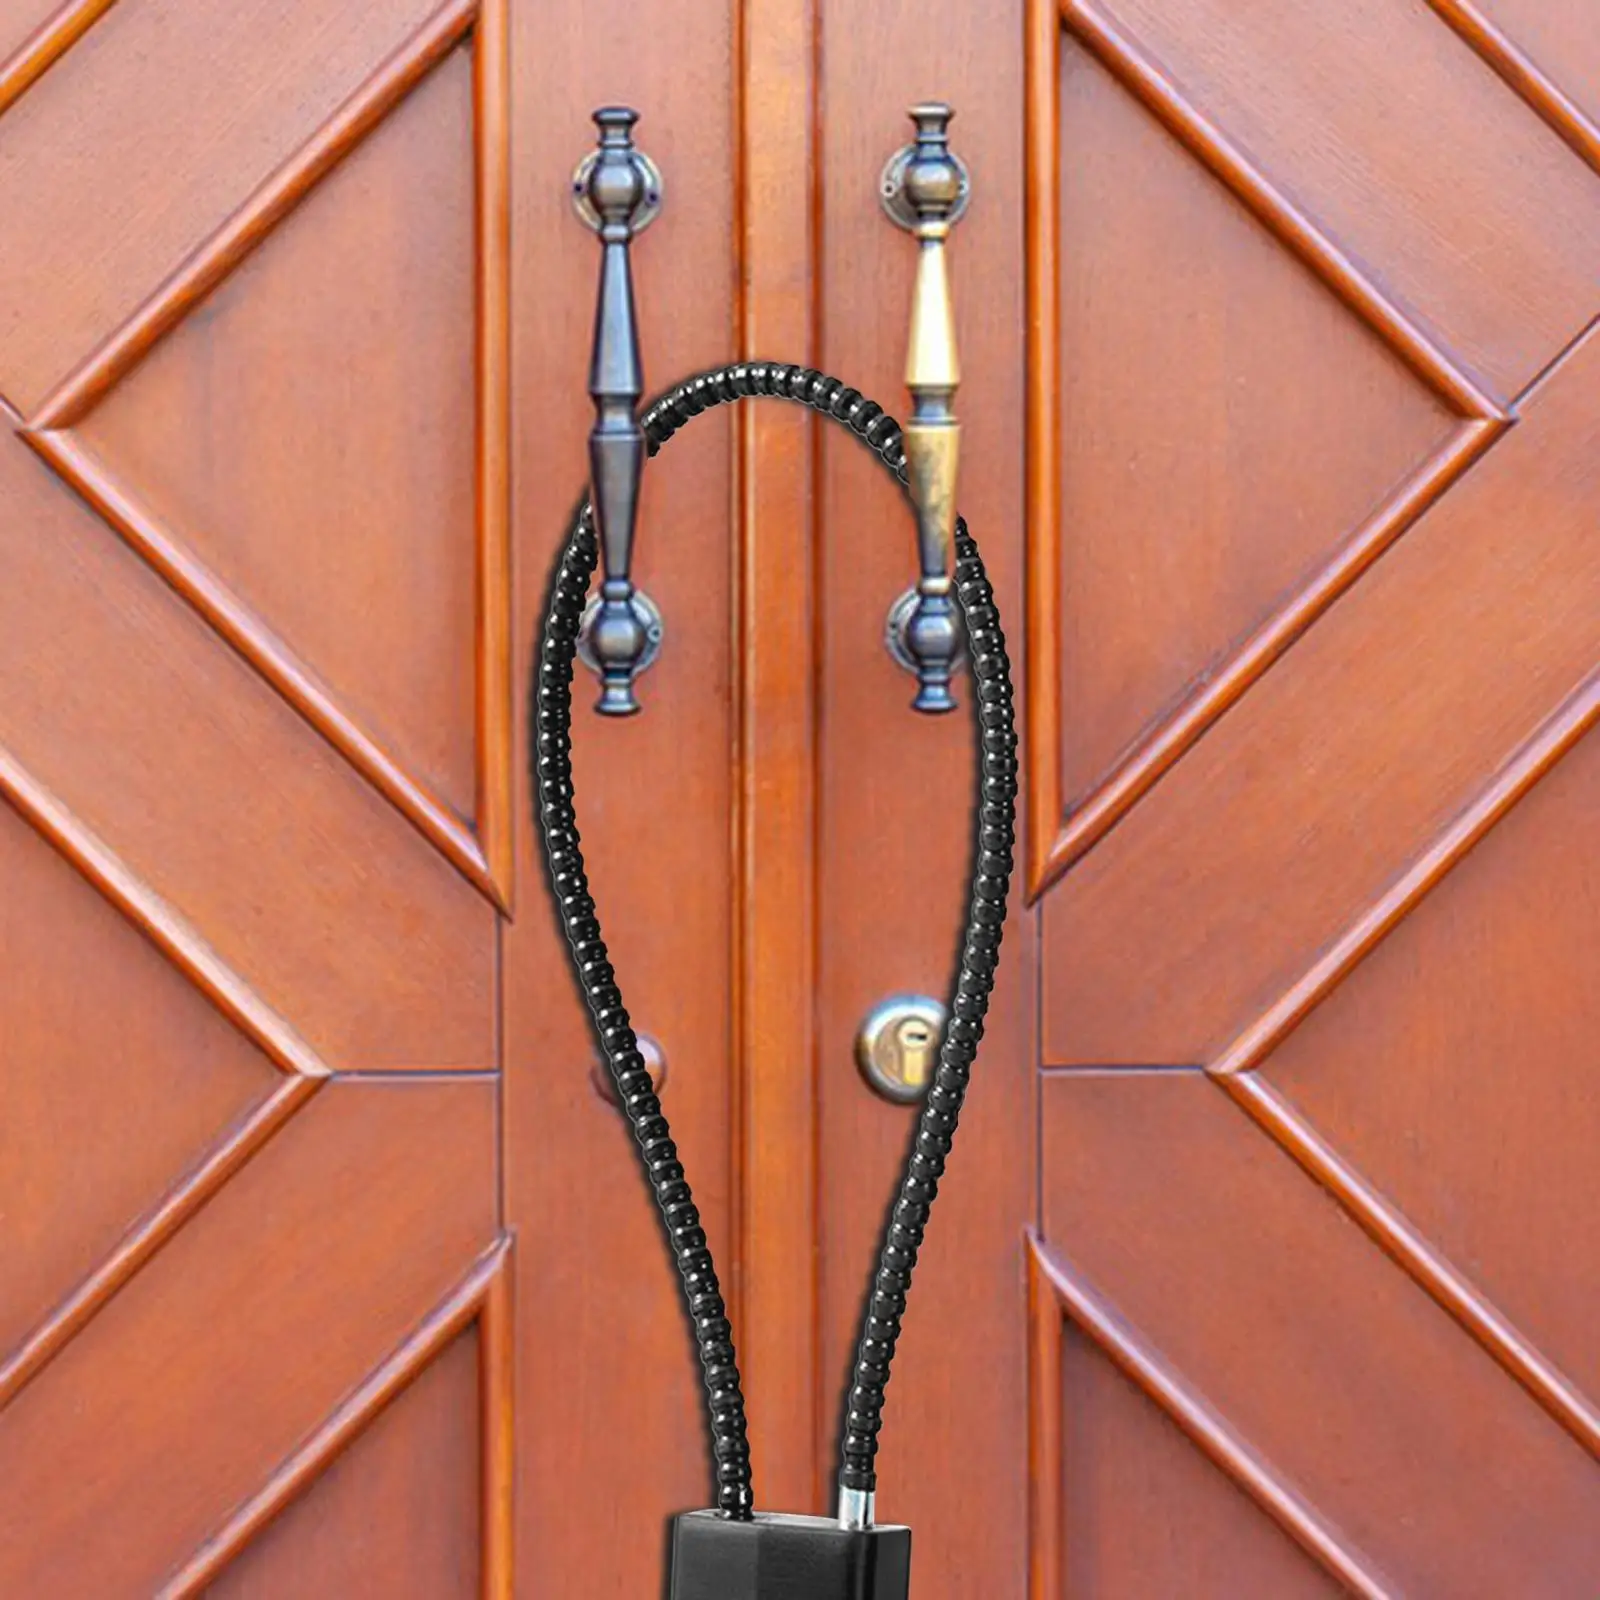 Combination Lock Waterproof with 5mm Steel Cable Rustproof Cable Luggage Locks for Suitcase Locker Helmet Luggage